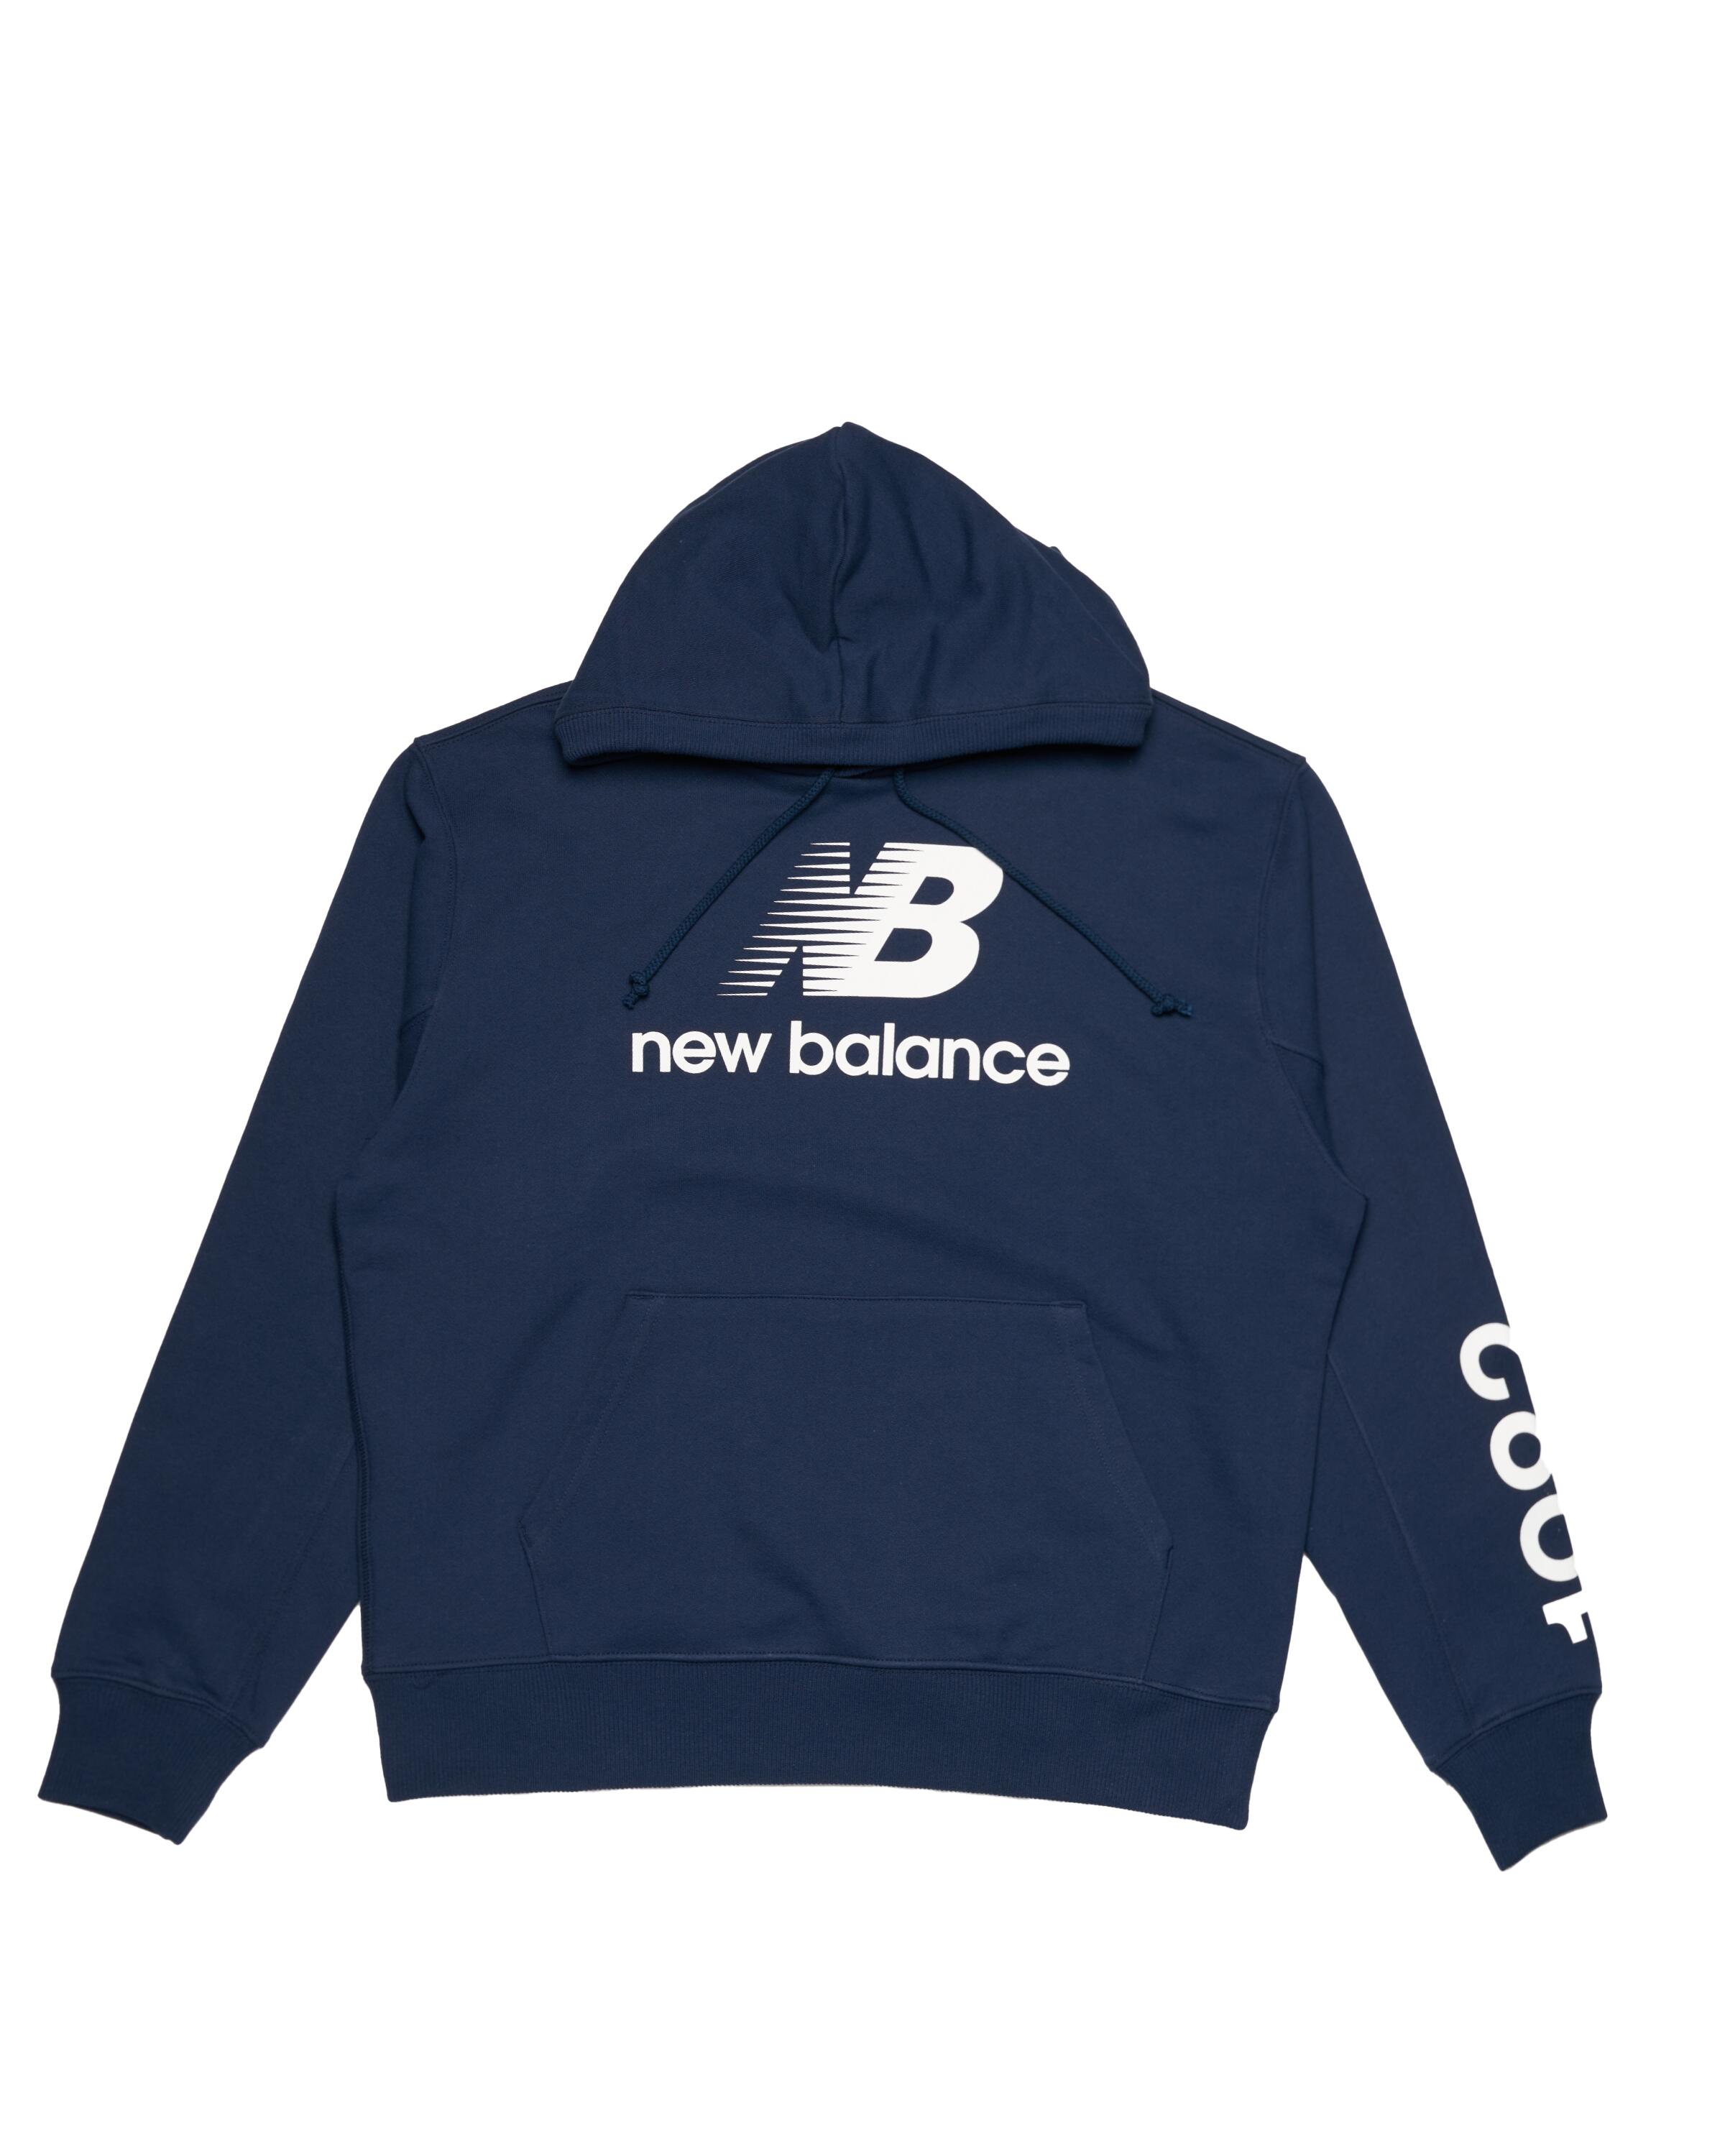 new balance made in usa heritage hoodie